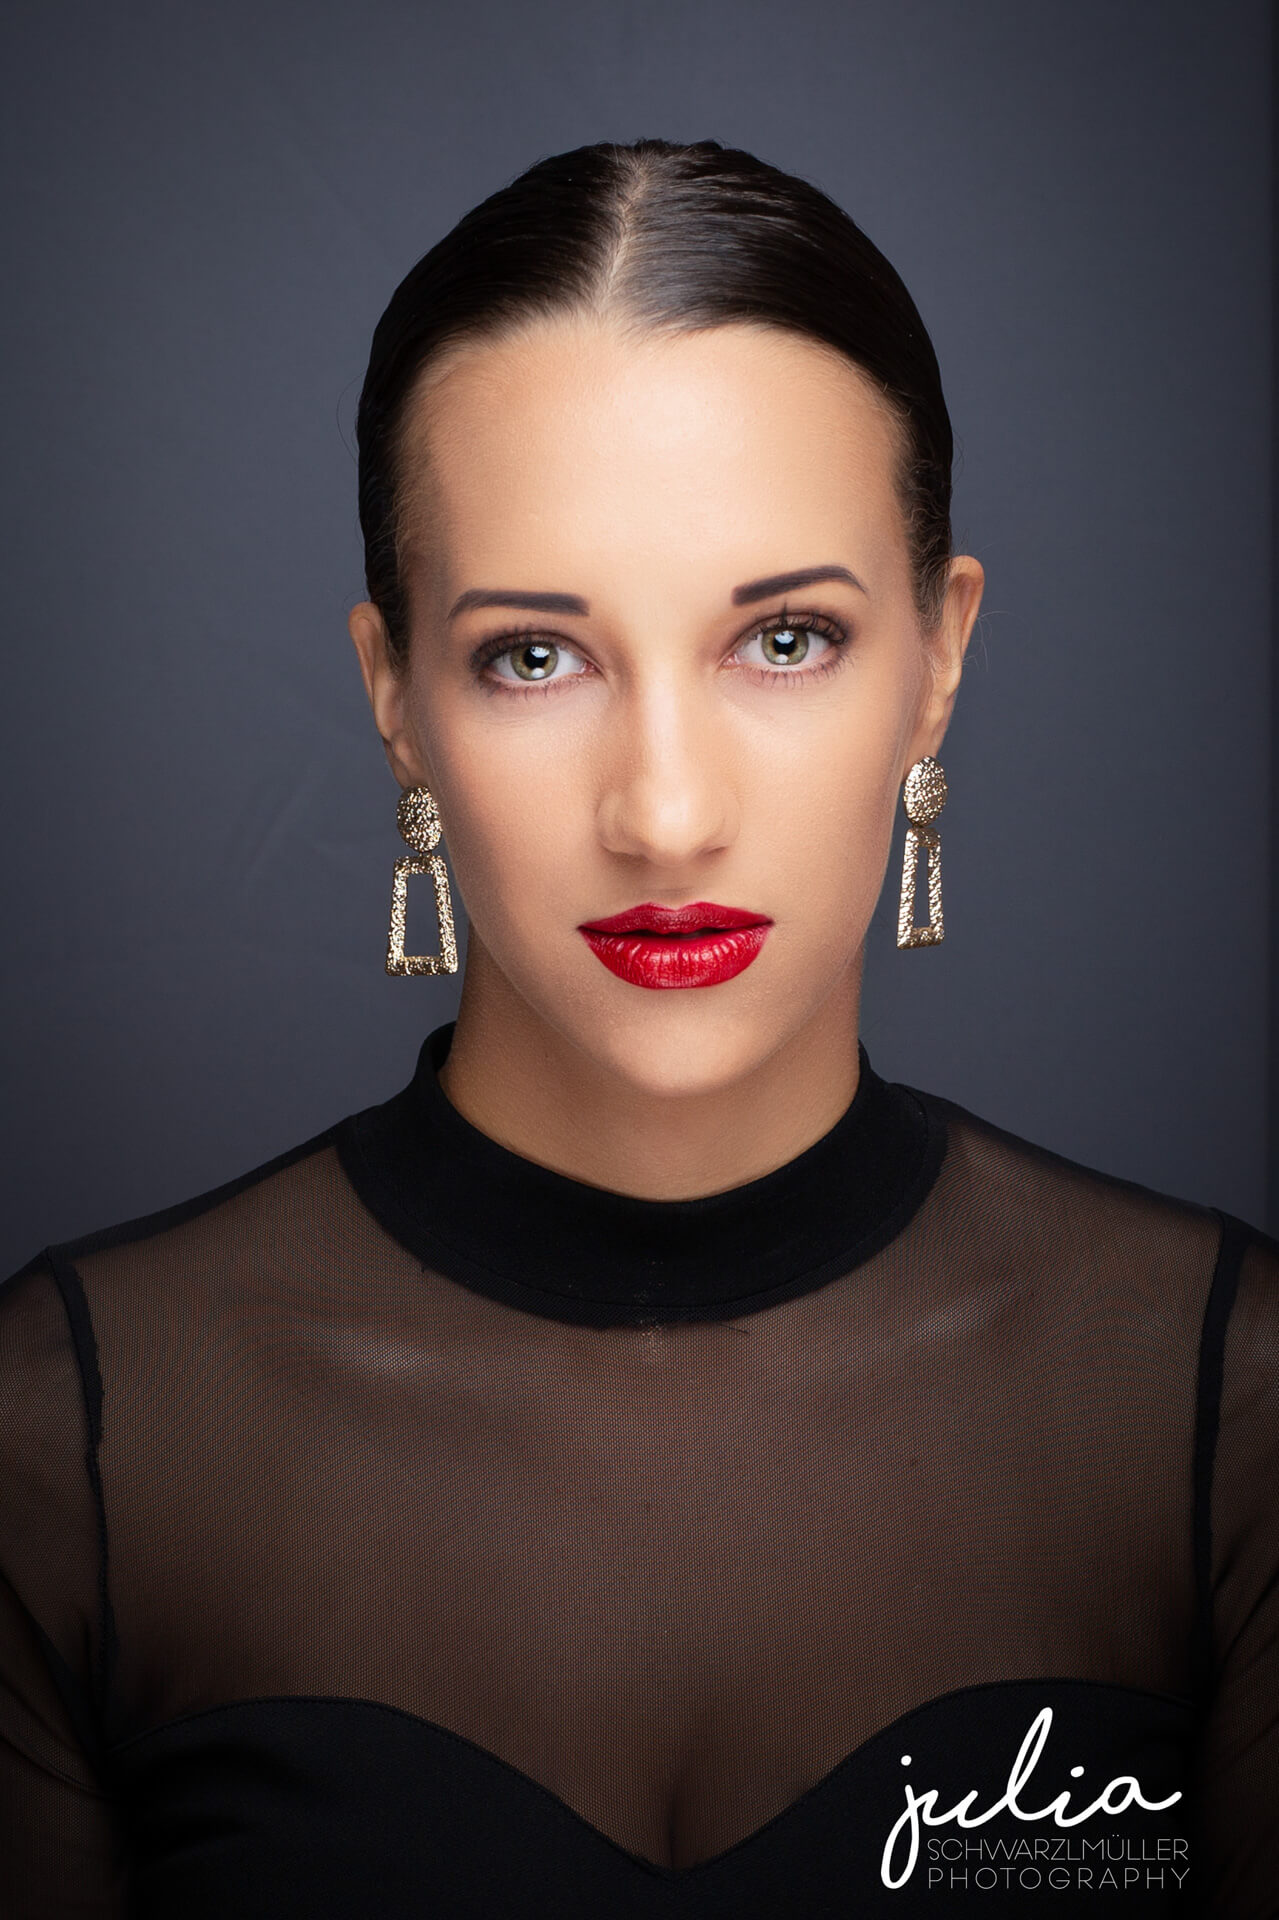 Portraitfoto mit rotem Lippenstift